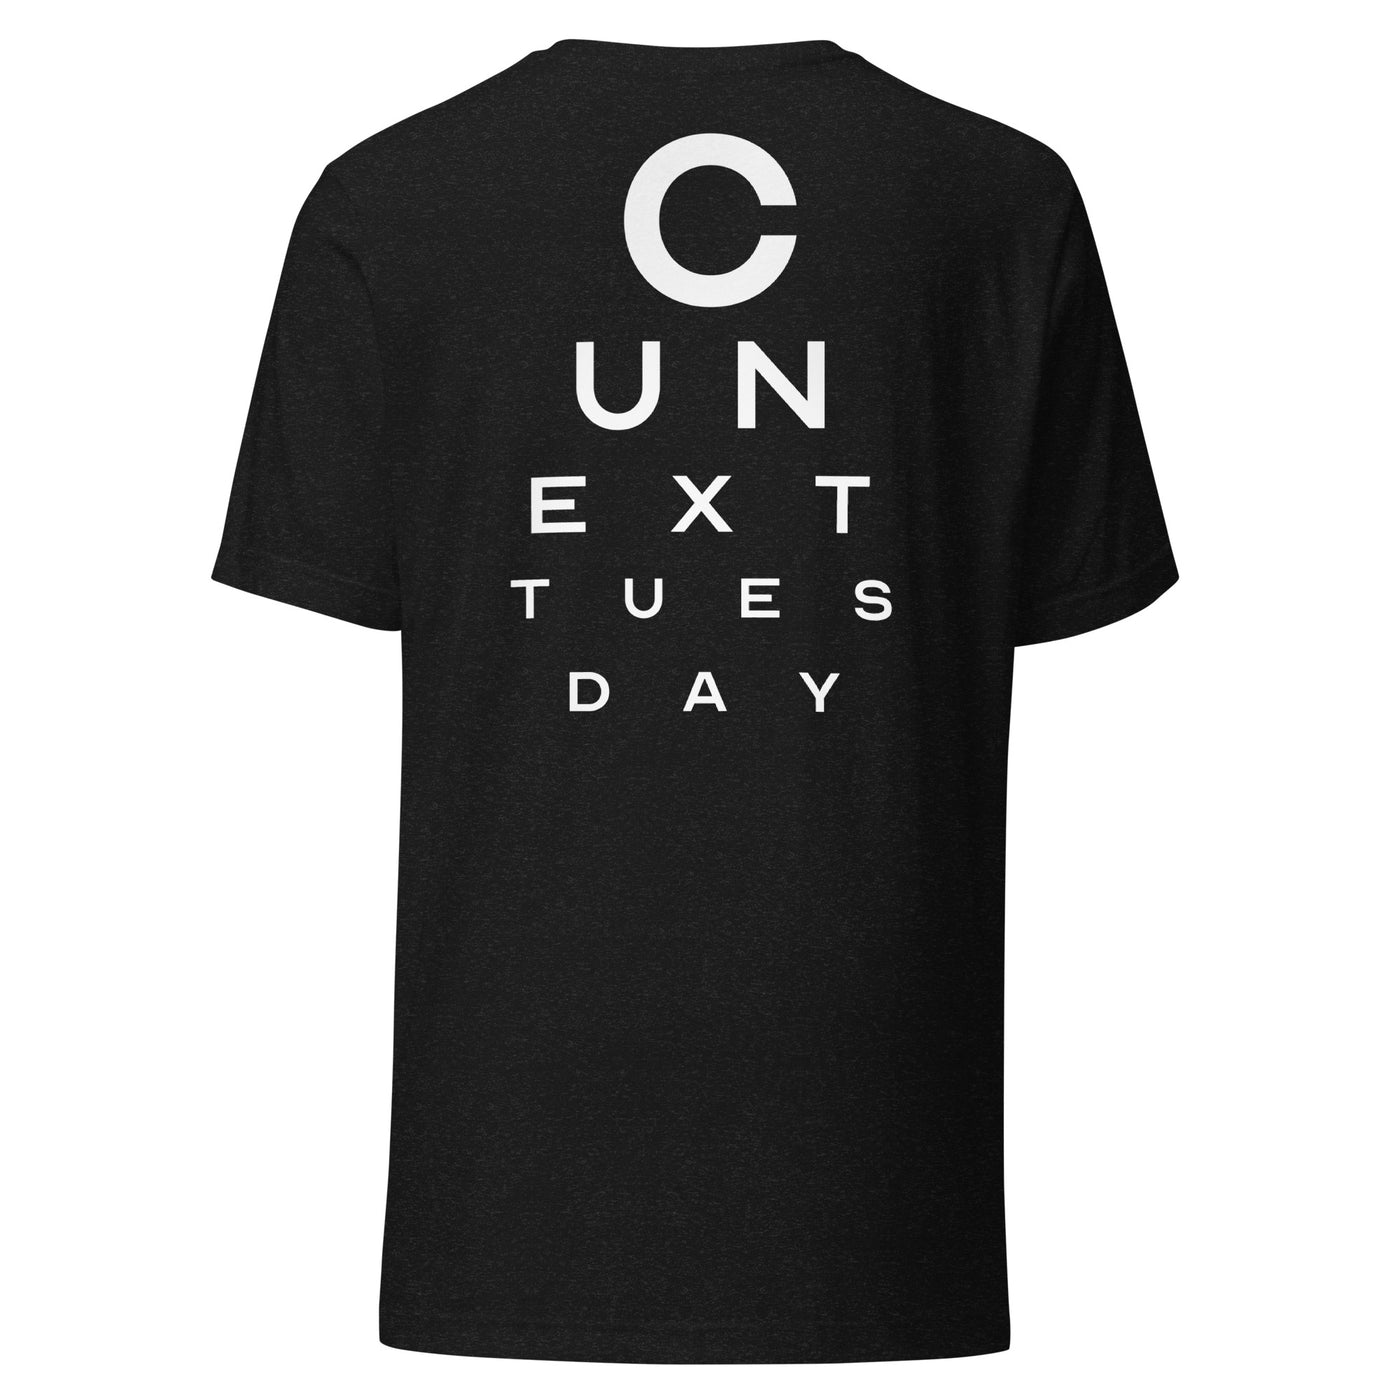 C U Next Tuesday T-shirt